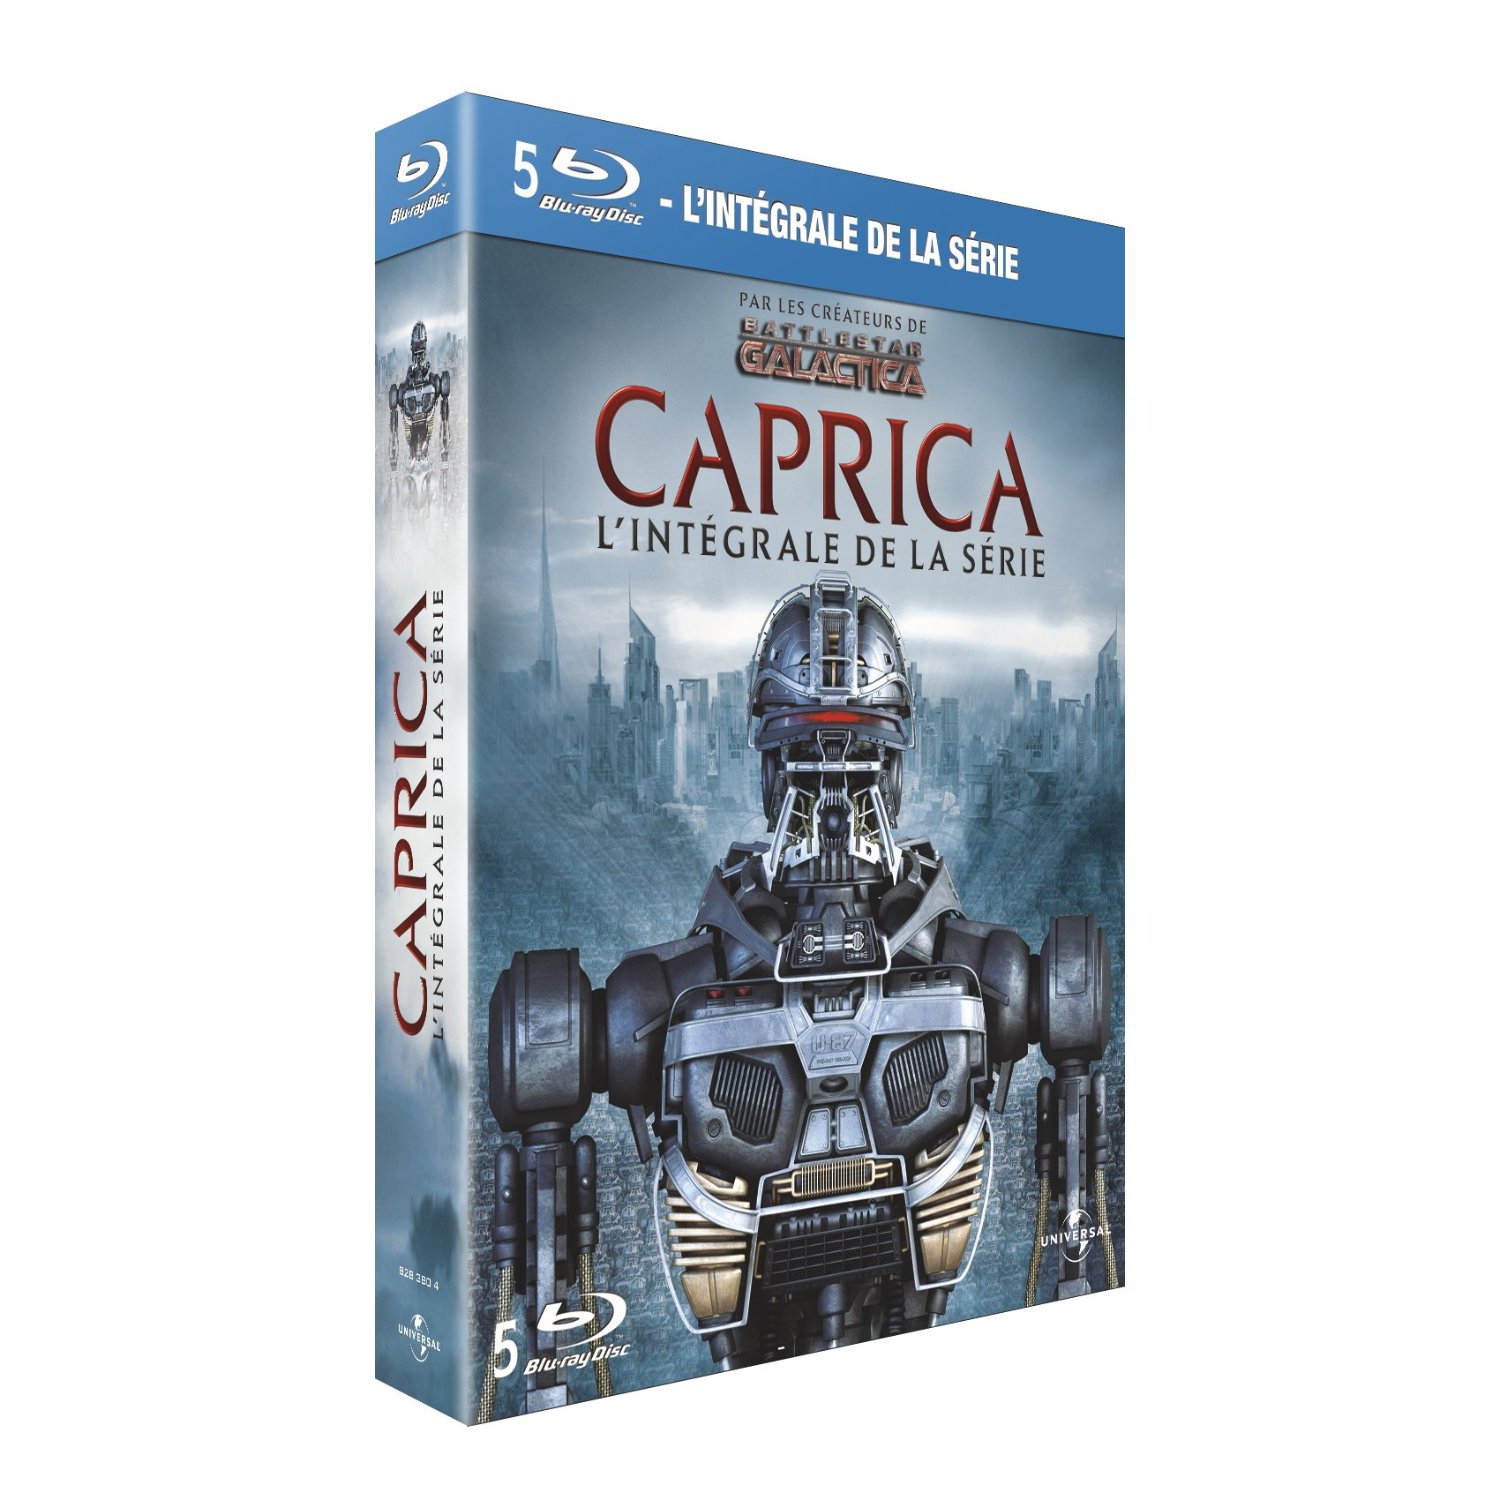 Caprica Season 1 Volume 2 Episode List